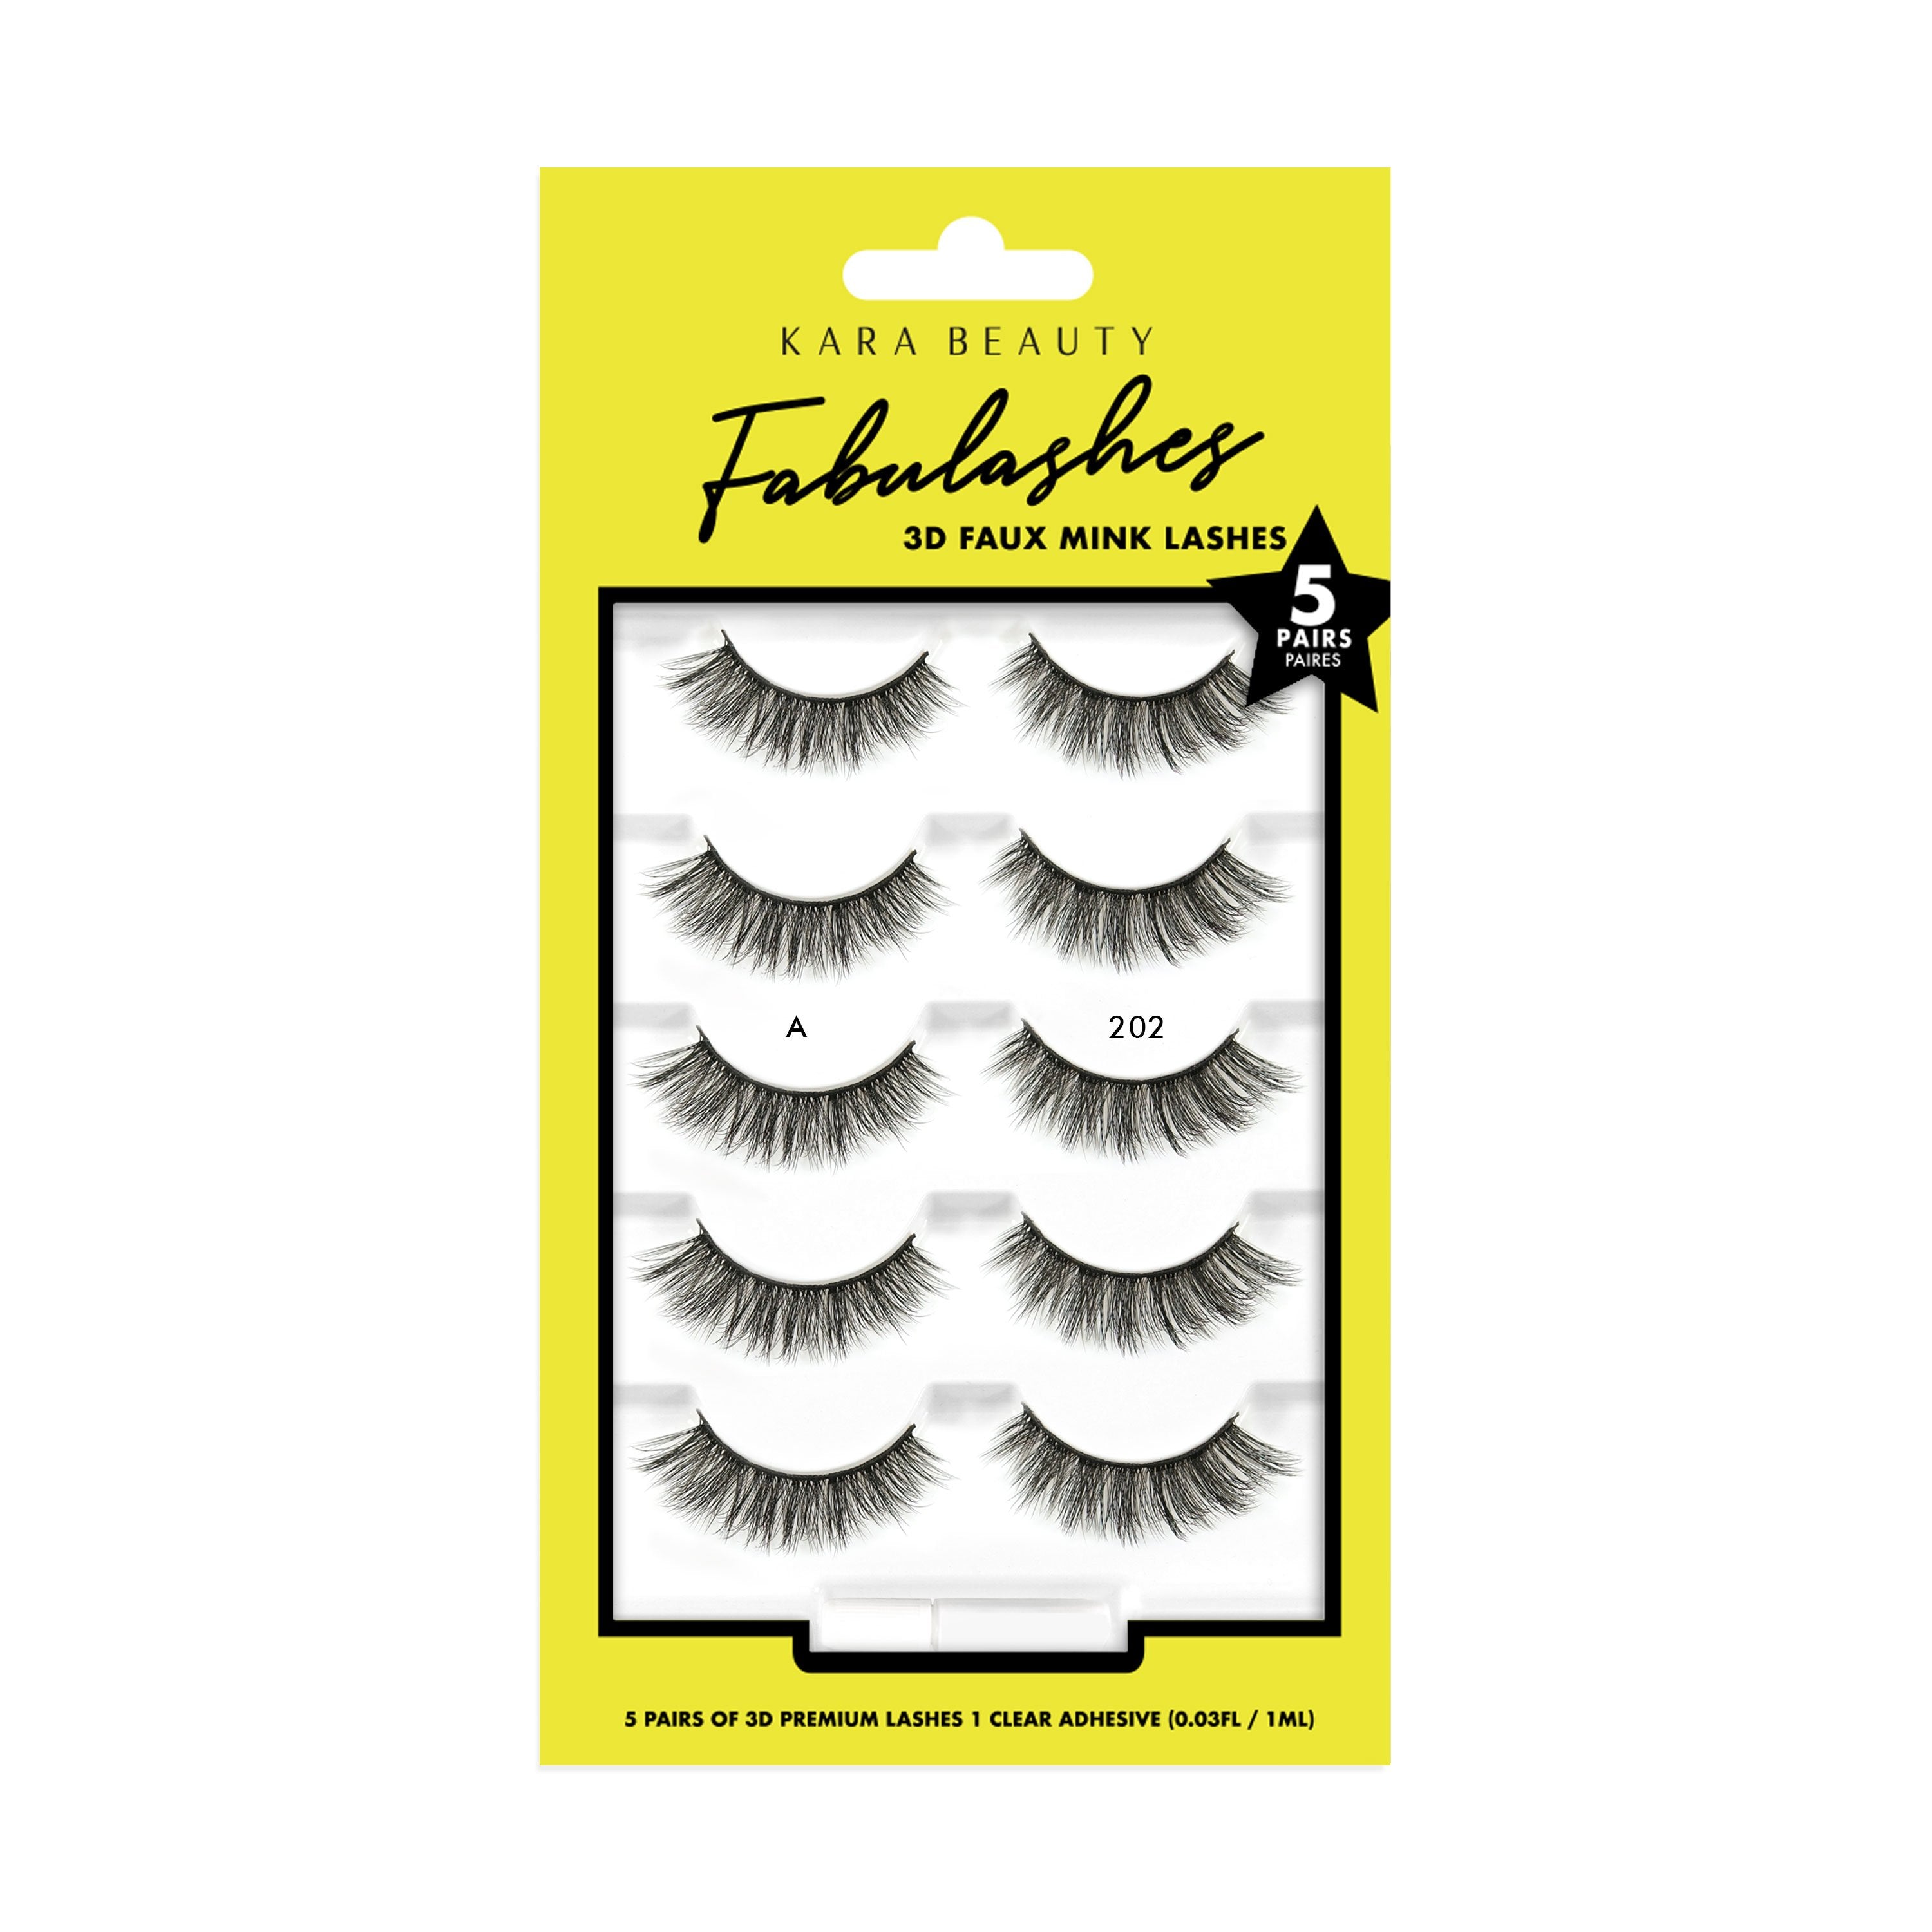 Fabulashes 3D Faux mink eyelashes in 5 pair multi-pack